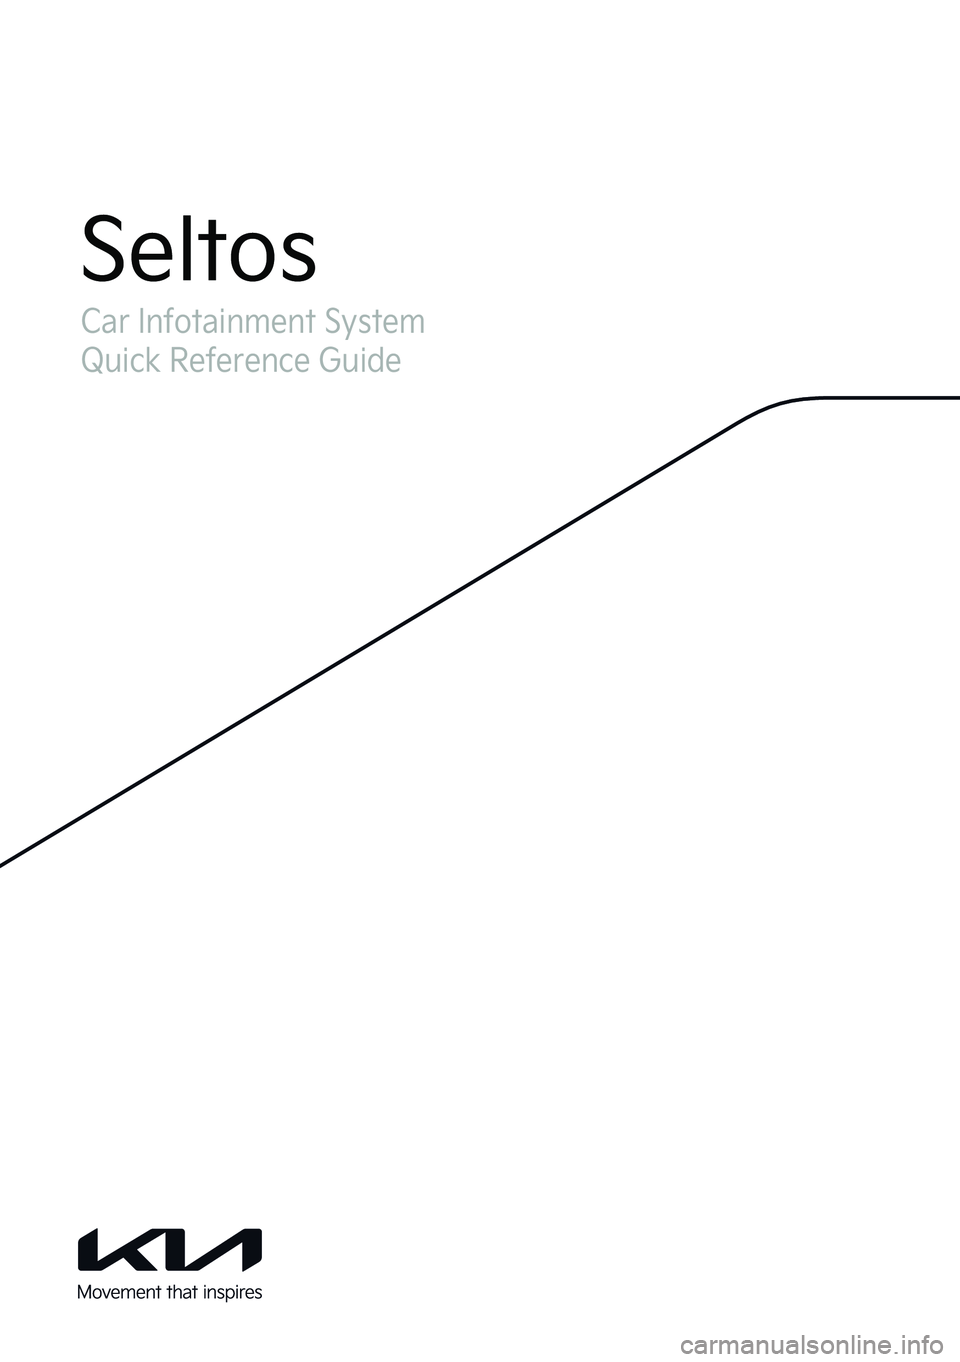 KIA SELTOS 2022  Navigation System Quick Reference Guide Car Infotainment System
Quick Reference Guide
Seltos  